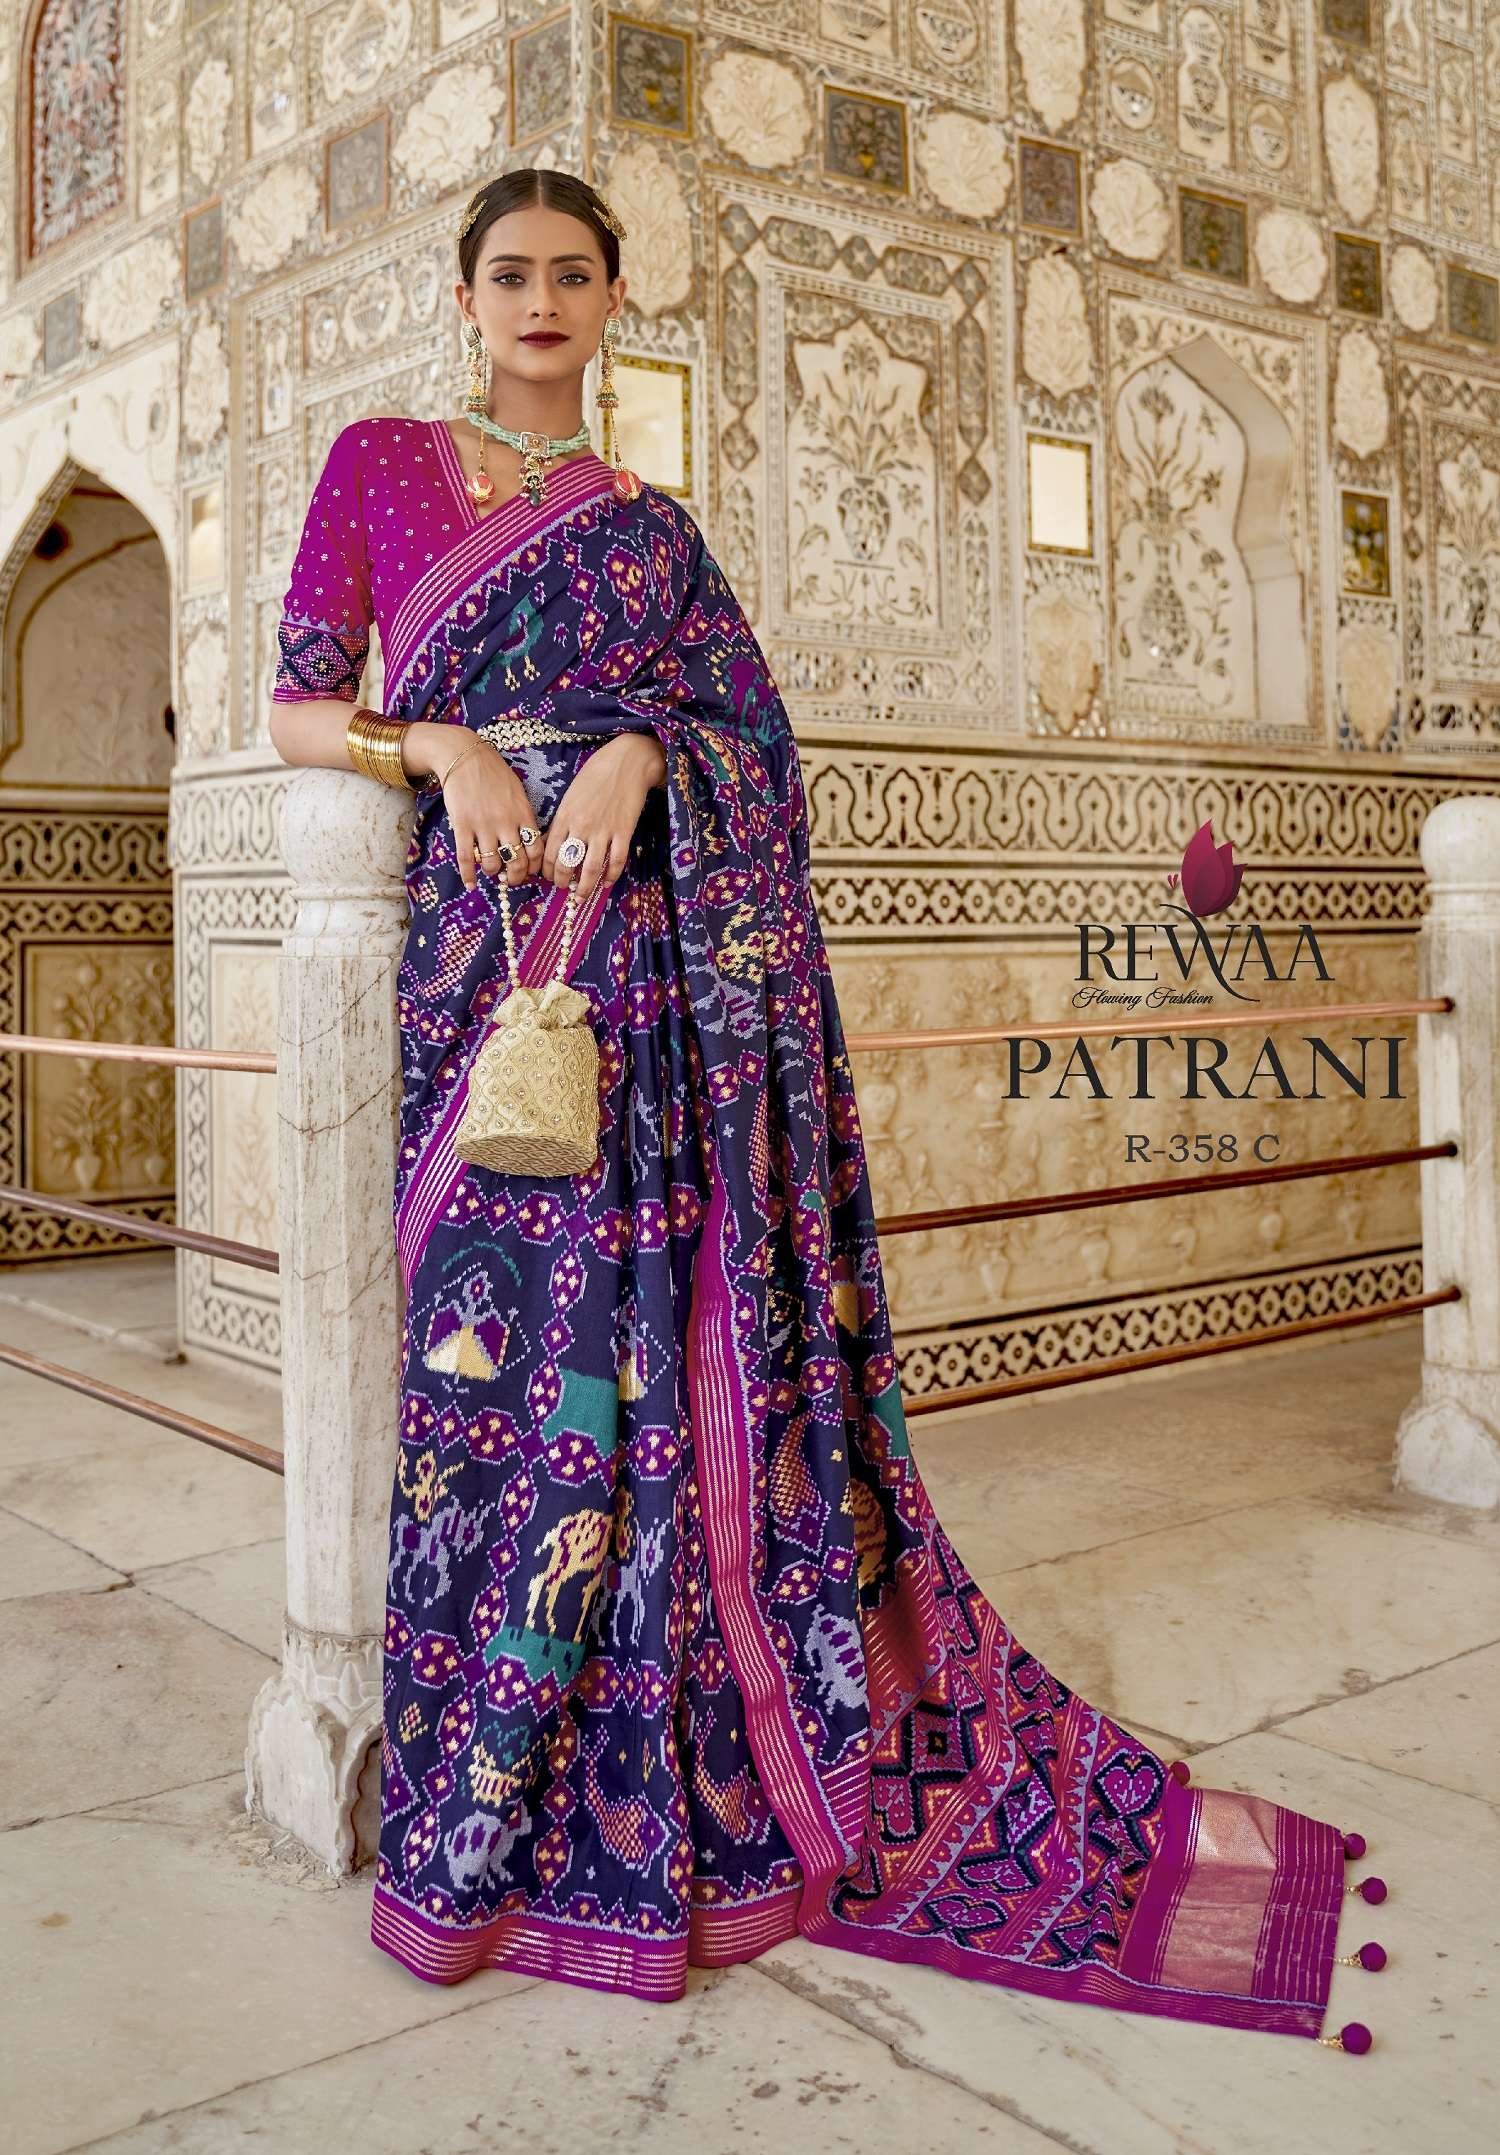 Rewaa Patrani Vol 1 Festive Designer Silk Saree Wholesale catalog